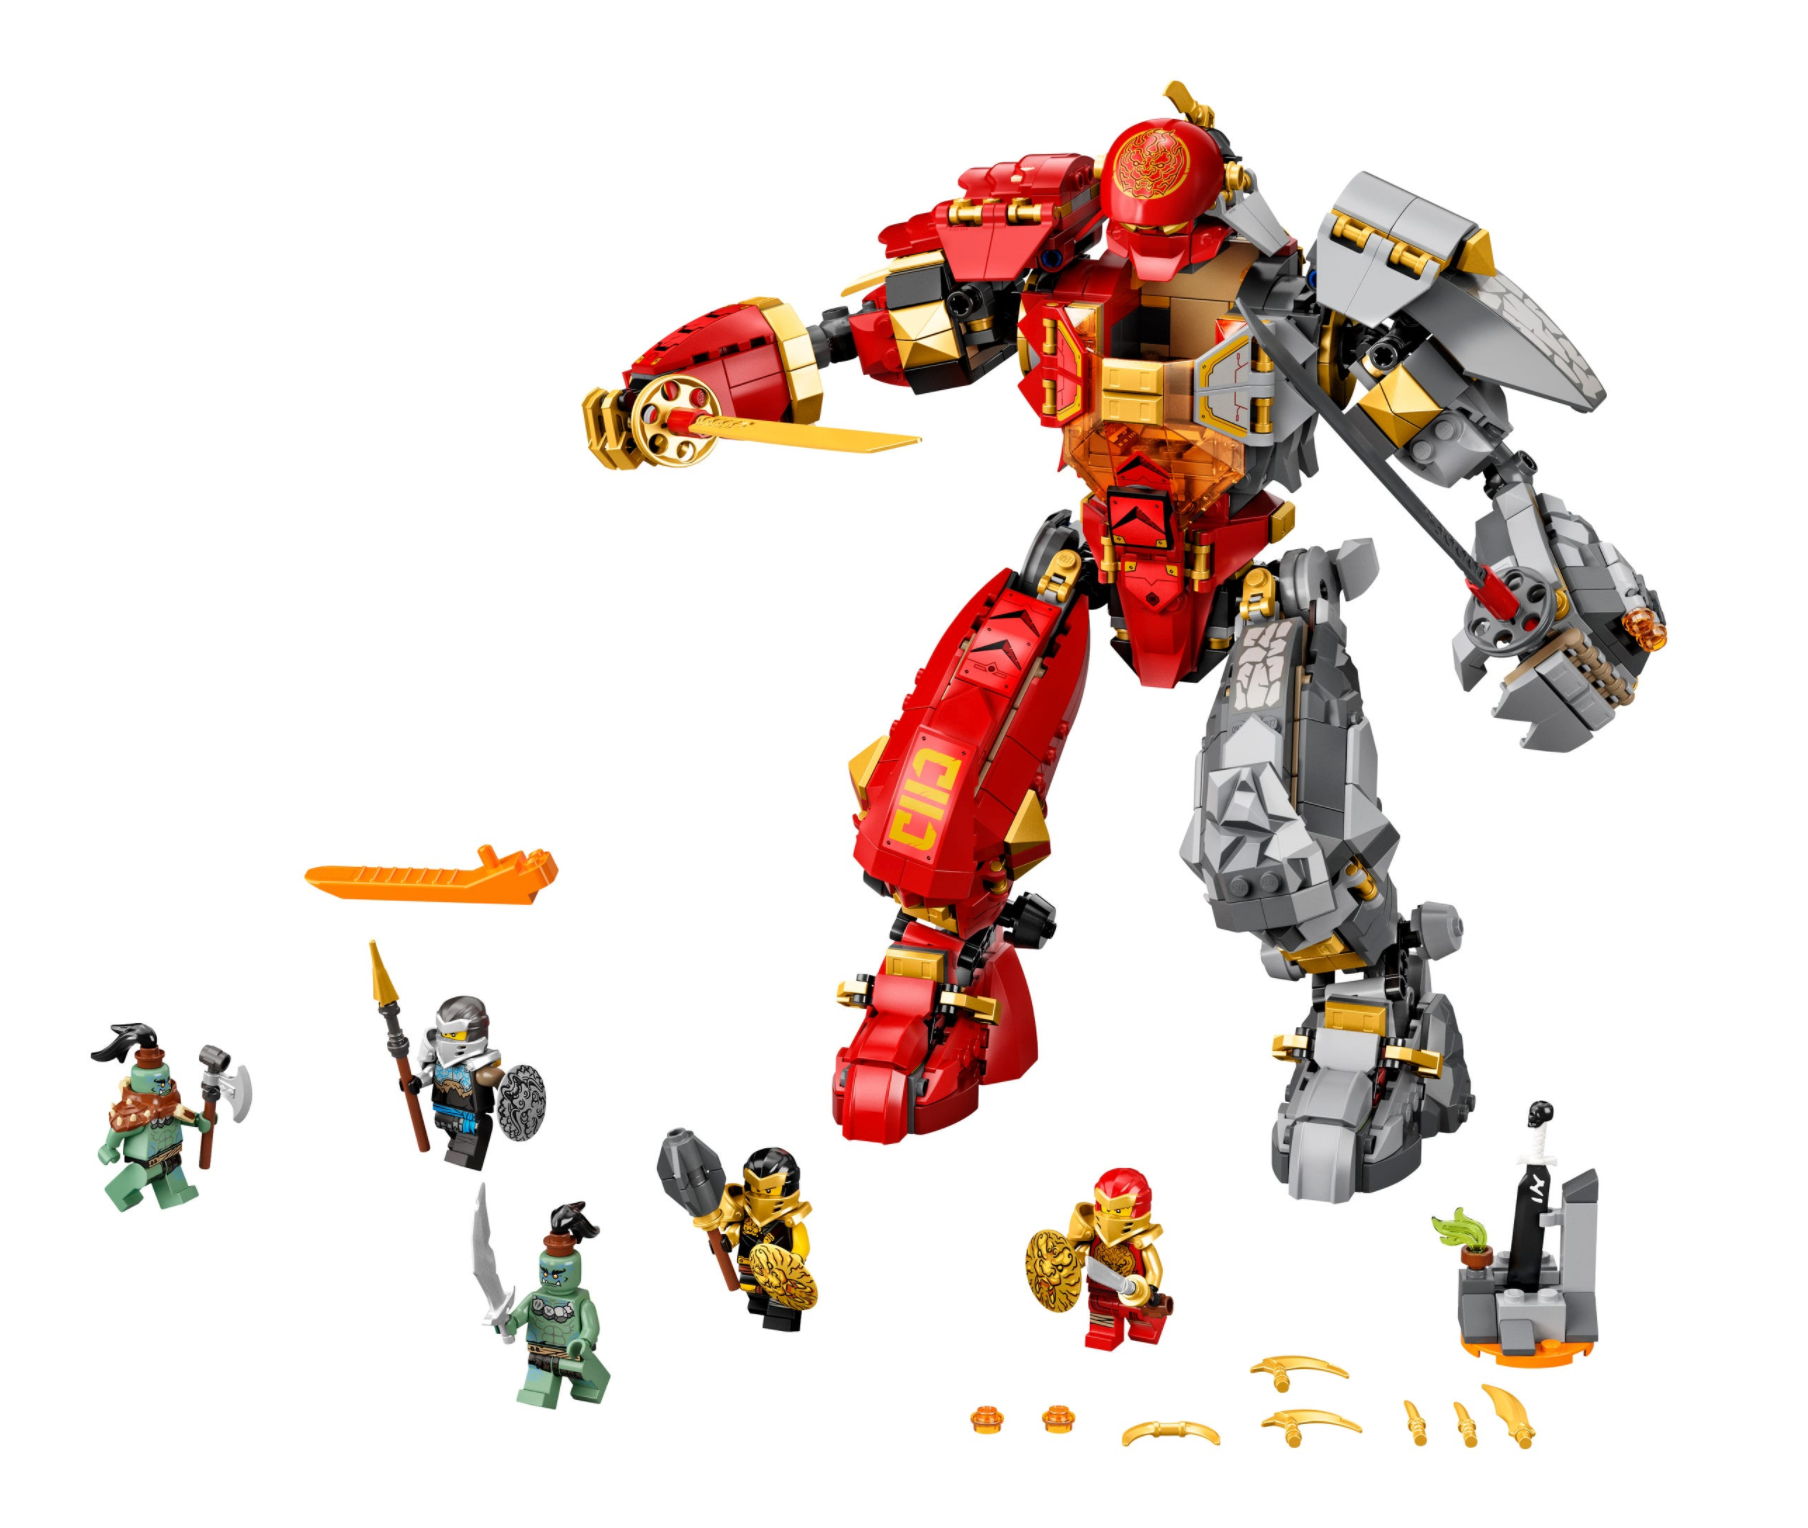 LEGO: Ninjago - Fire Stone Mech